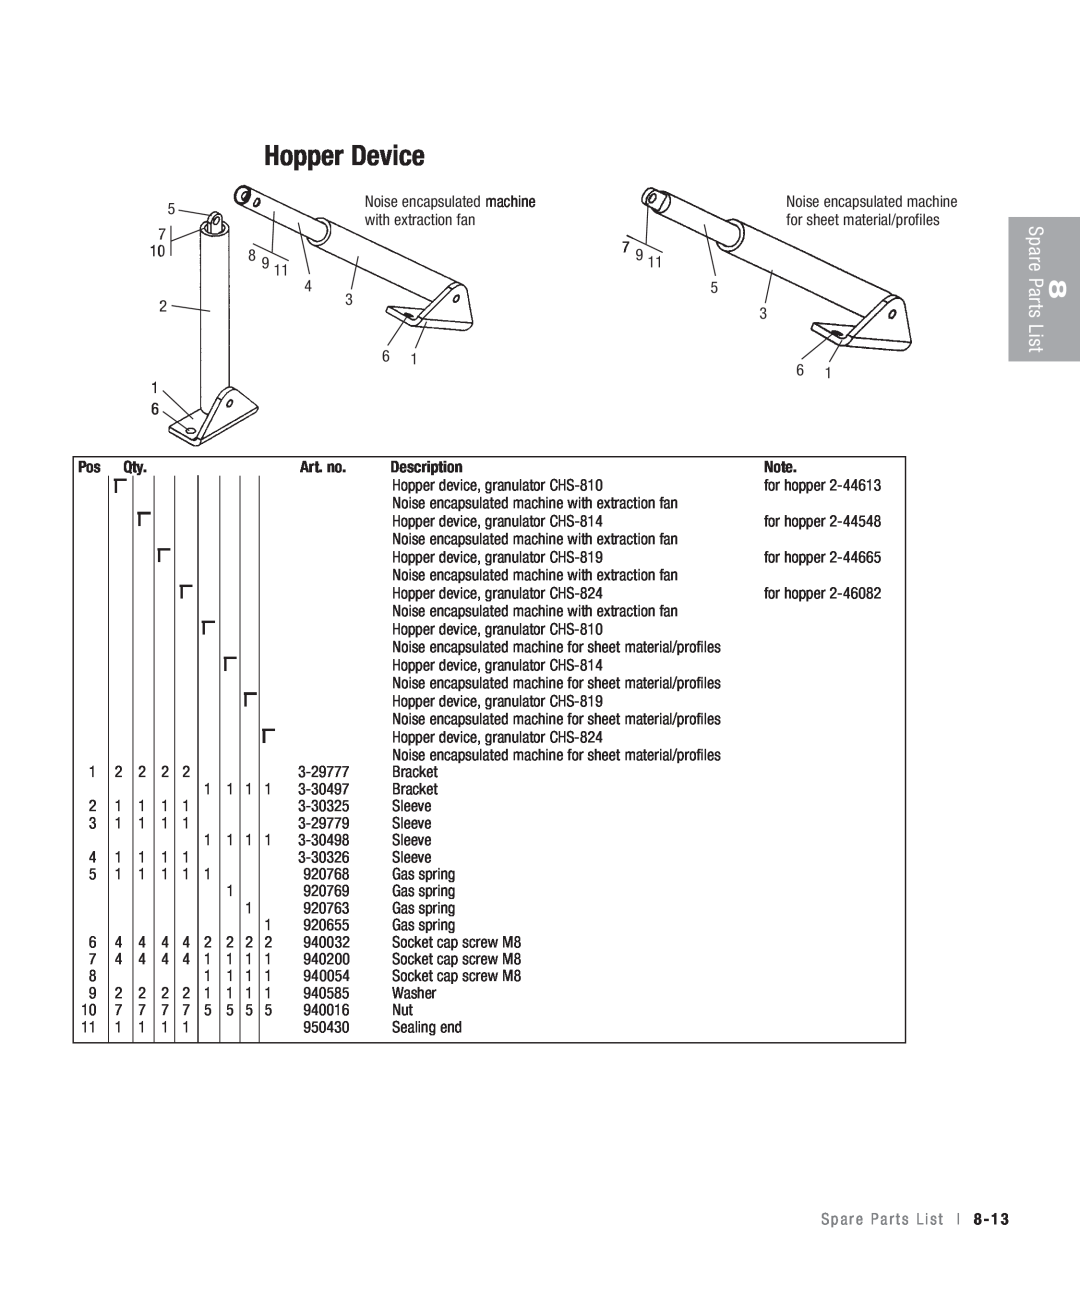 Conair CHS-810 manual Hopper Device, Art. no, Description, Spare Parts, List, S p a r e P a r t s L i s t l 8 - 1 